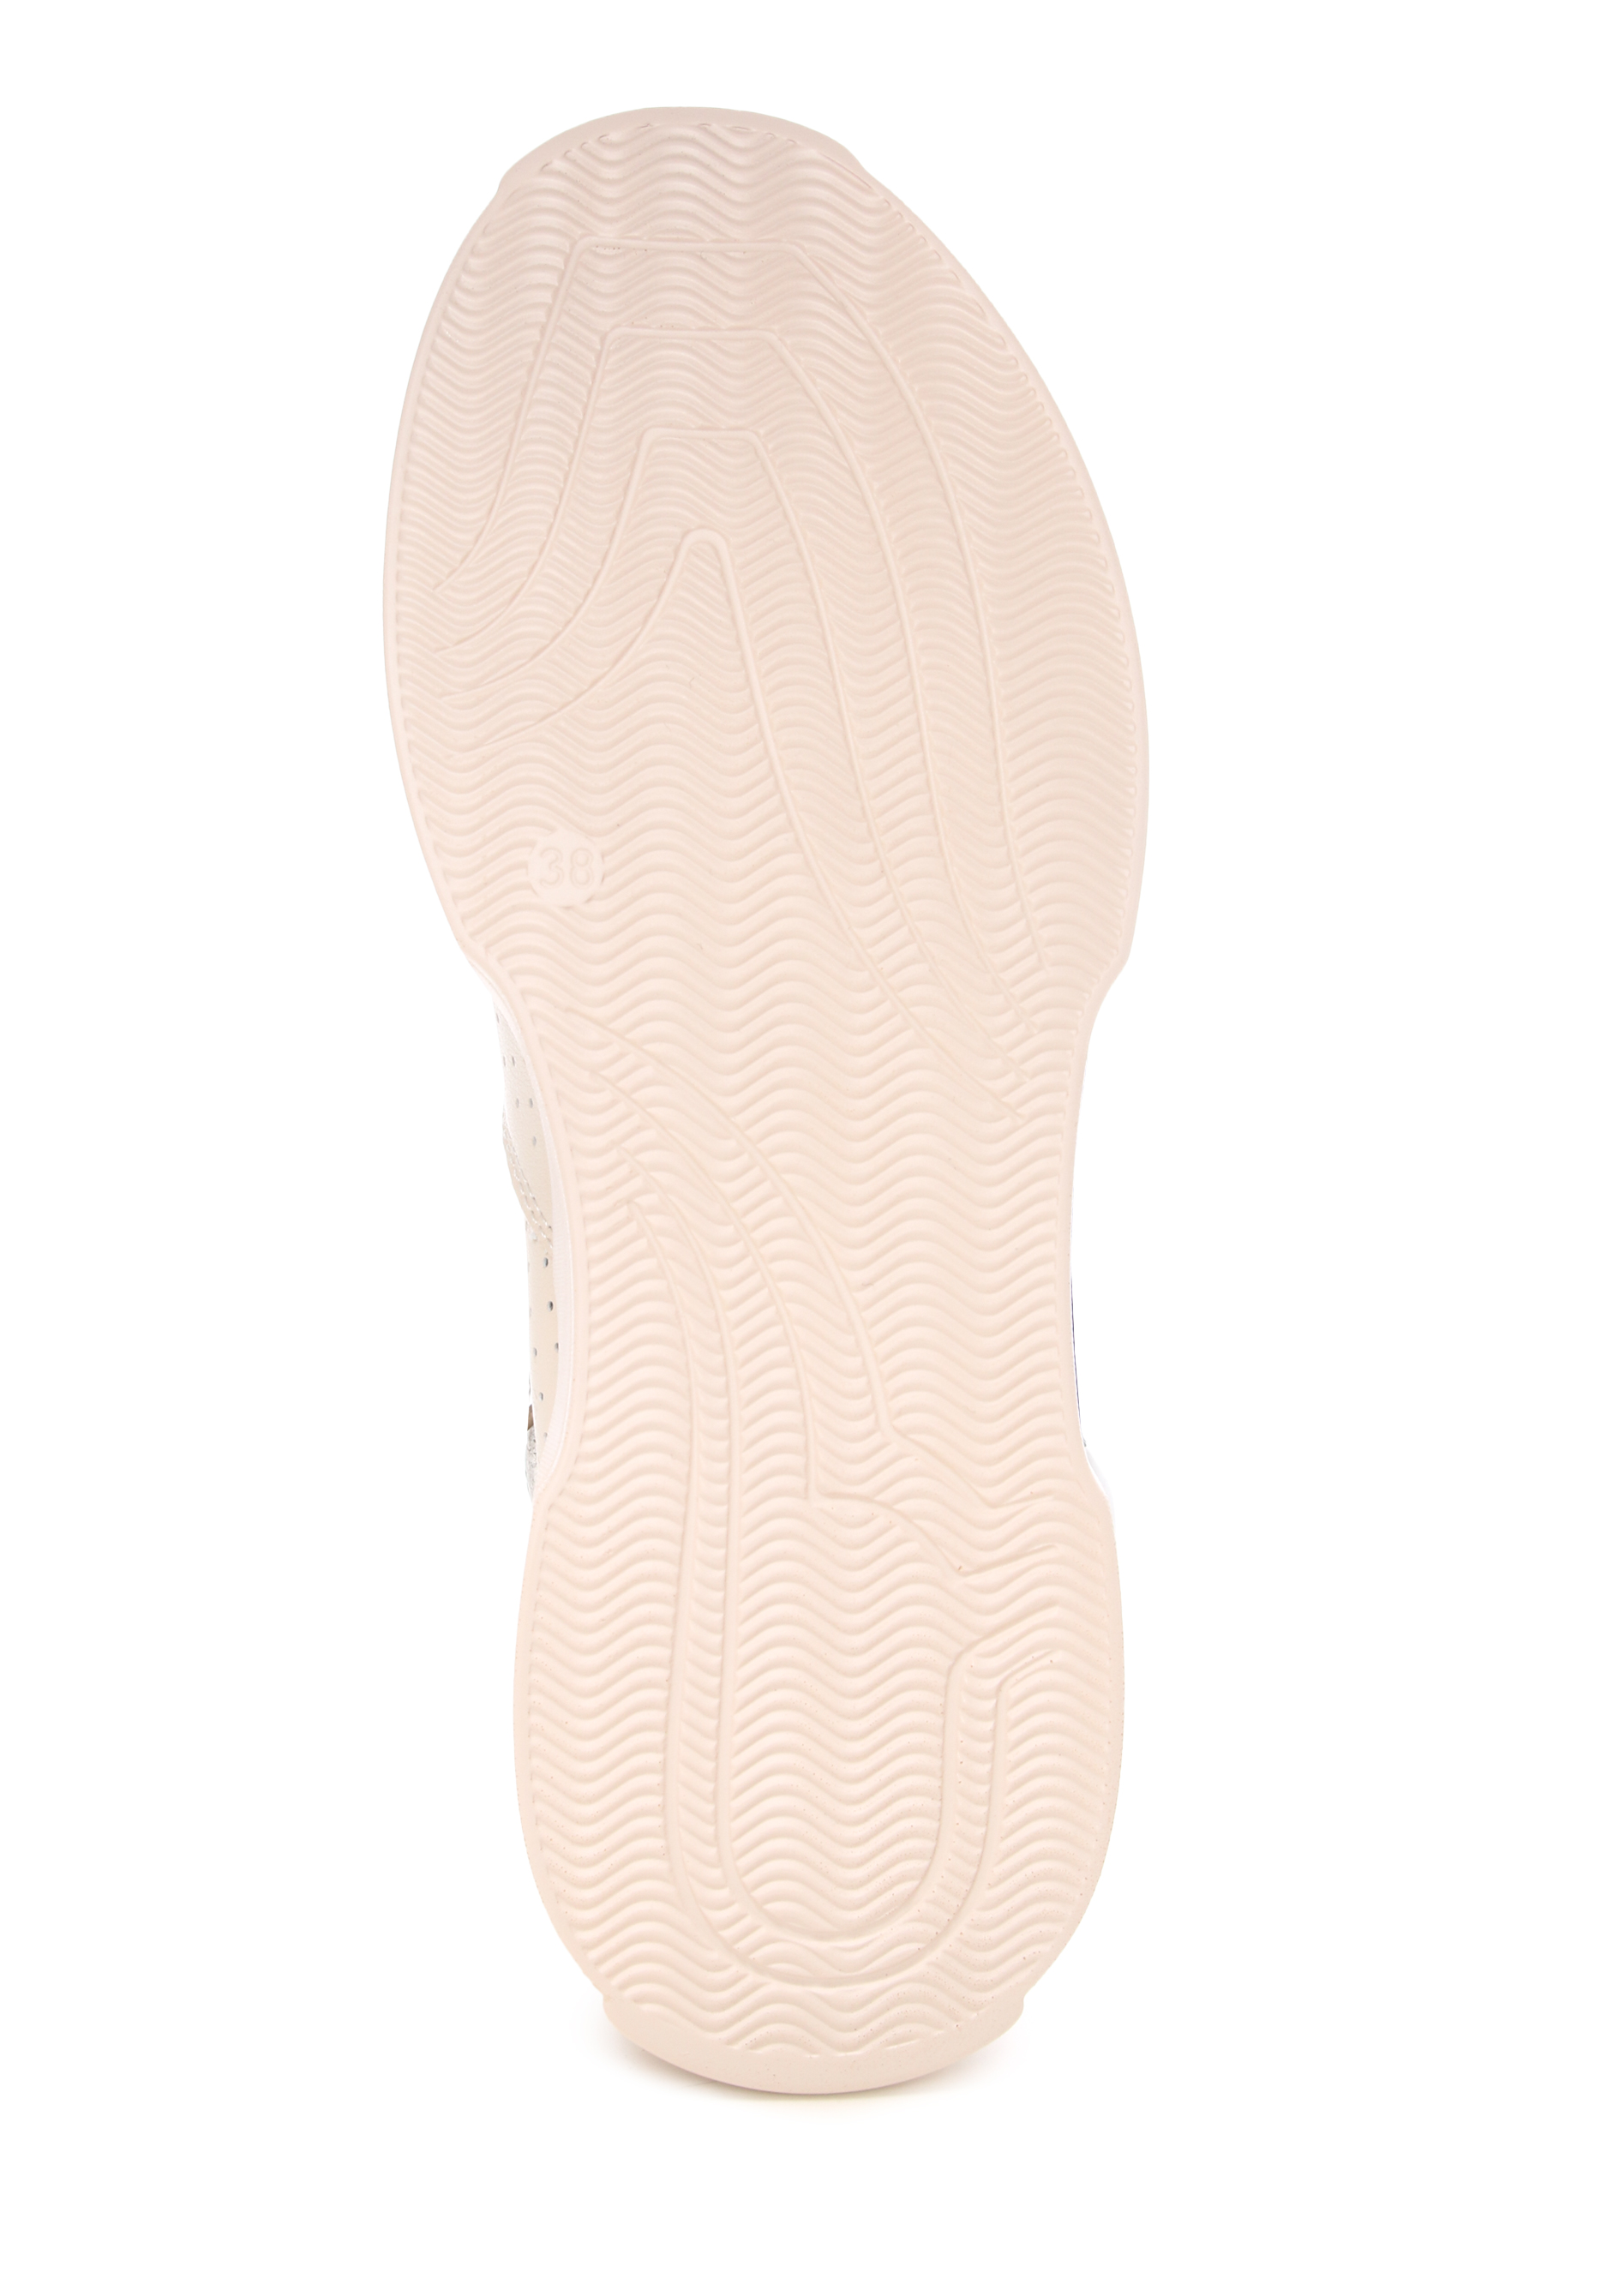 Полуботинки летние женские "Валия" COVANI, цвет белый, размер 38 - фото 10